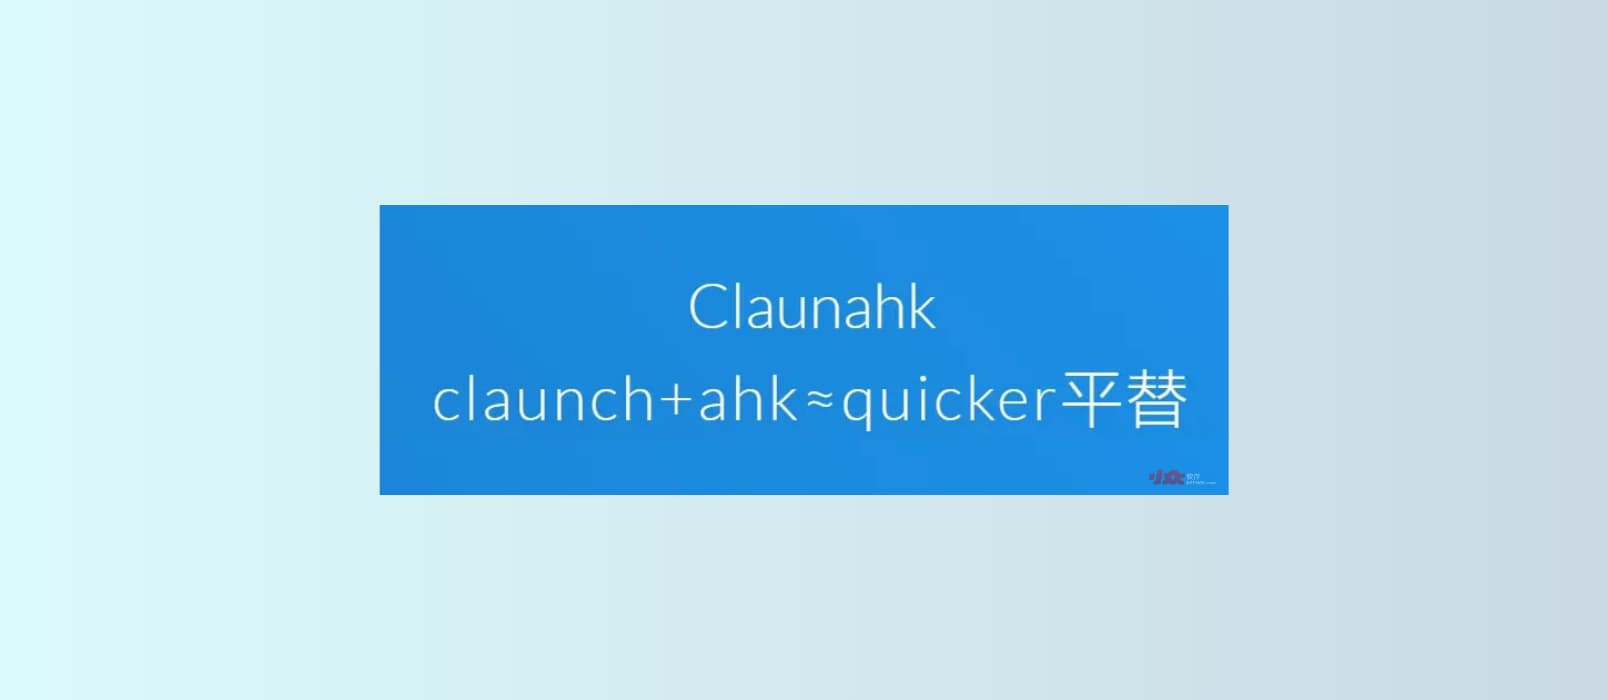 Claunahk 小工具 - AHK 用户的 Quicker 平替，简单但不简陋 1